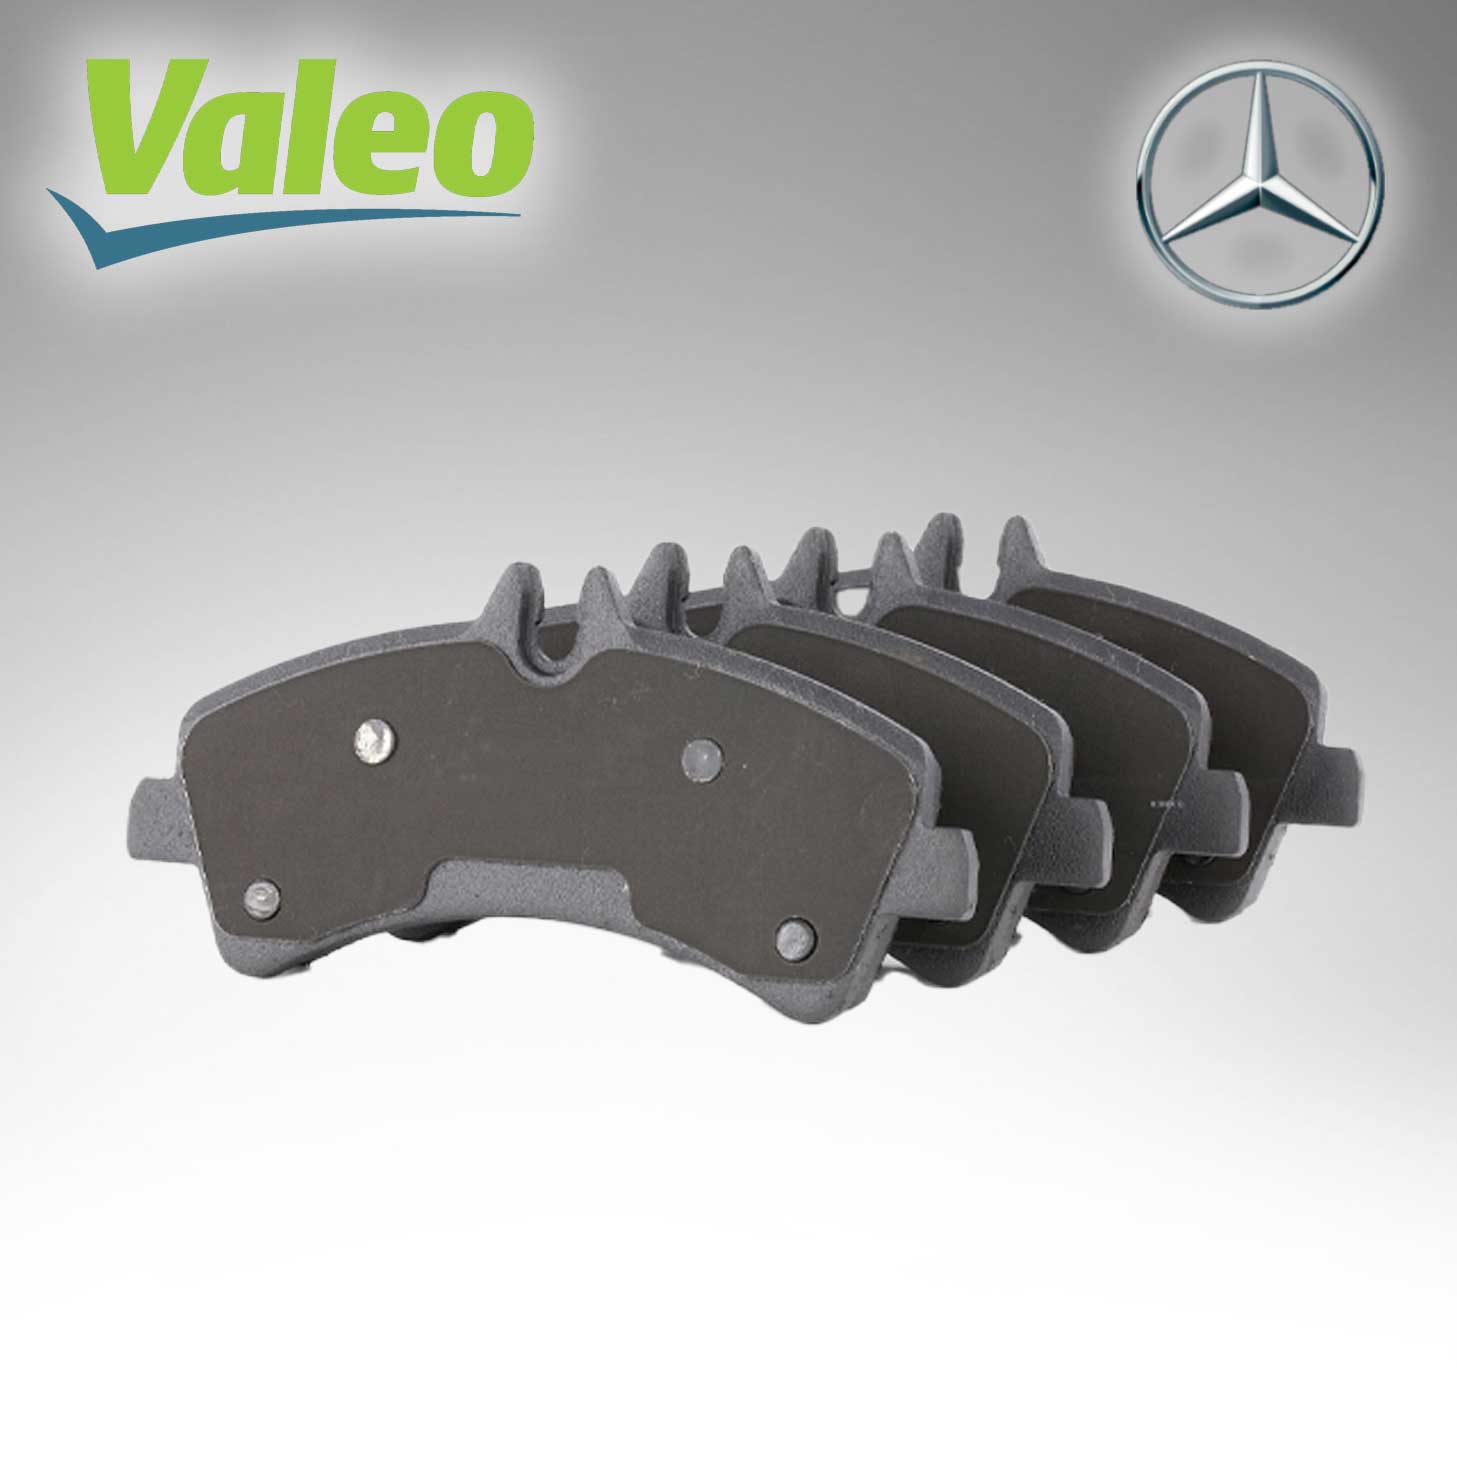 Valeo BRAKE PADS MERCEDES SPRINTER SERIES B906 (Val#670876) For Mercedes Benz 0044208120